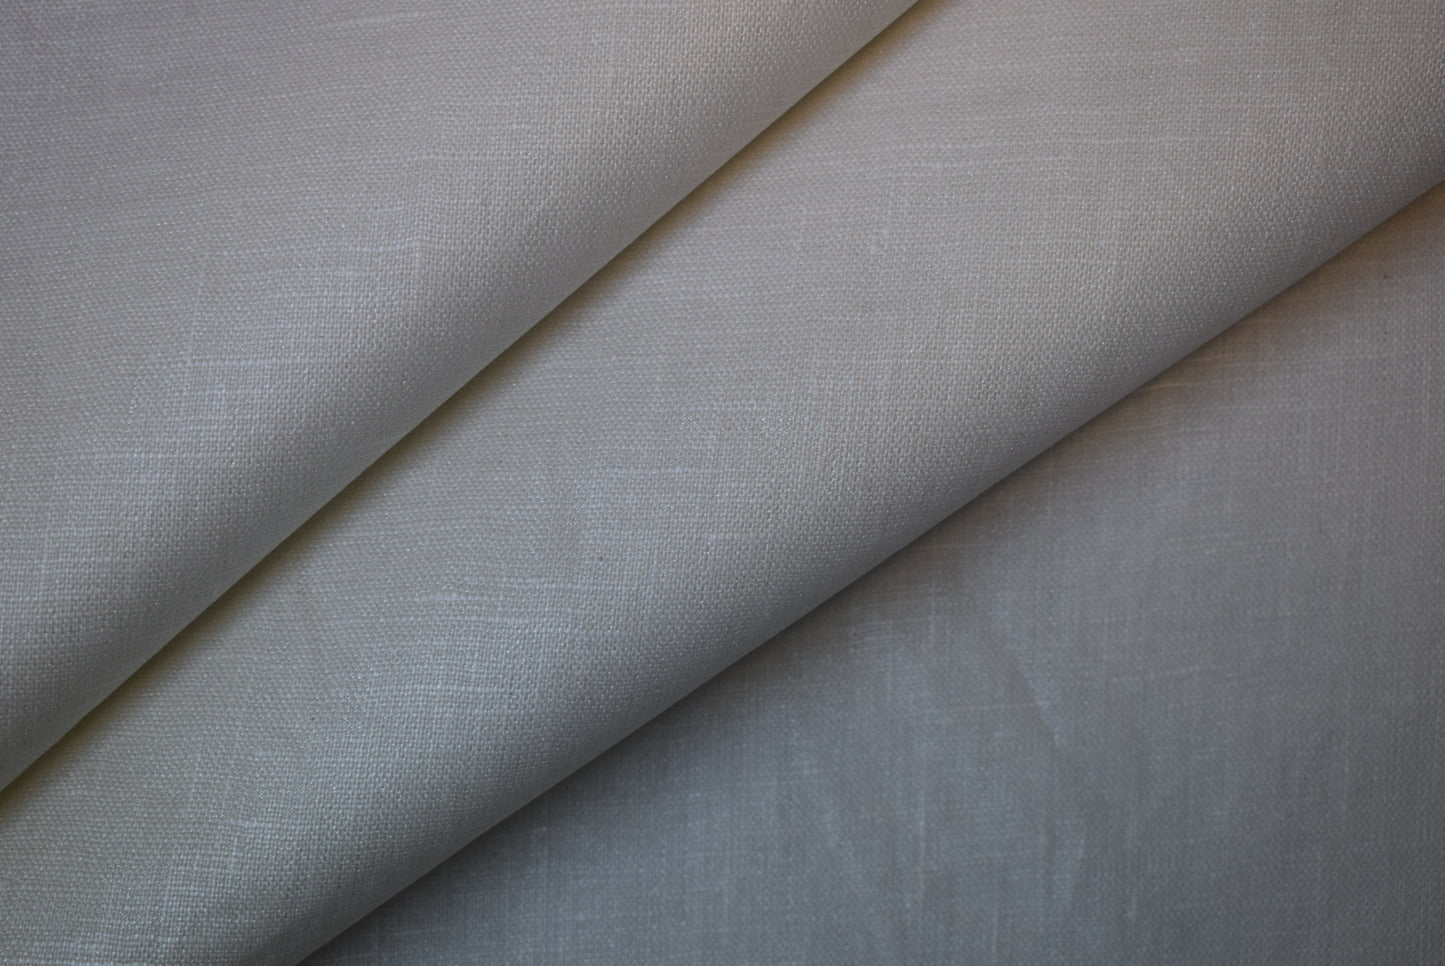 Ivory 'Waxed' Linen